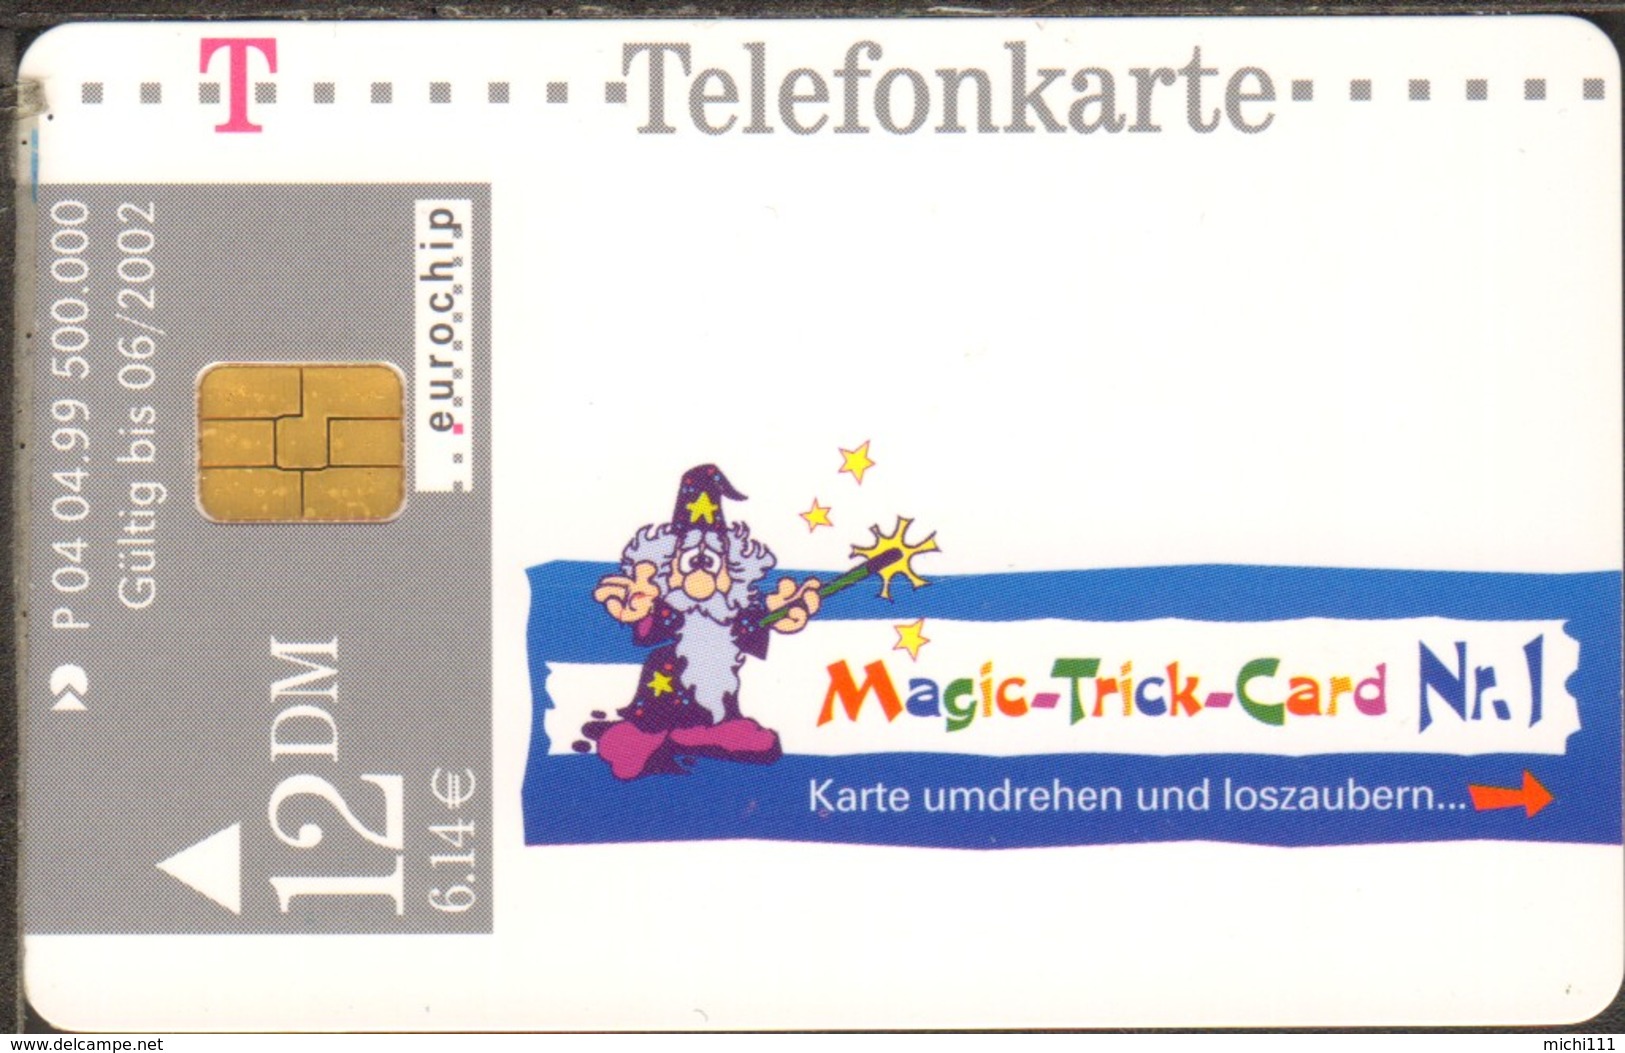 Phonecard Telefonkarte  Magic-Trick-Card Nr.1 P 04 04.99 12 DM/6,14€ Used - R-Series : Régionales